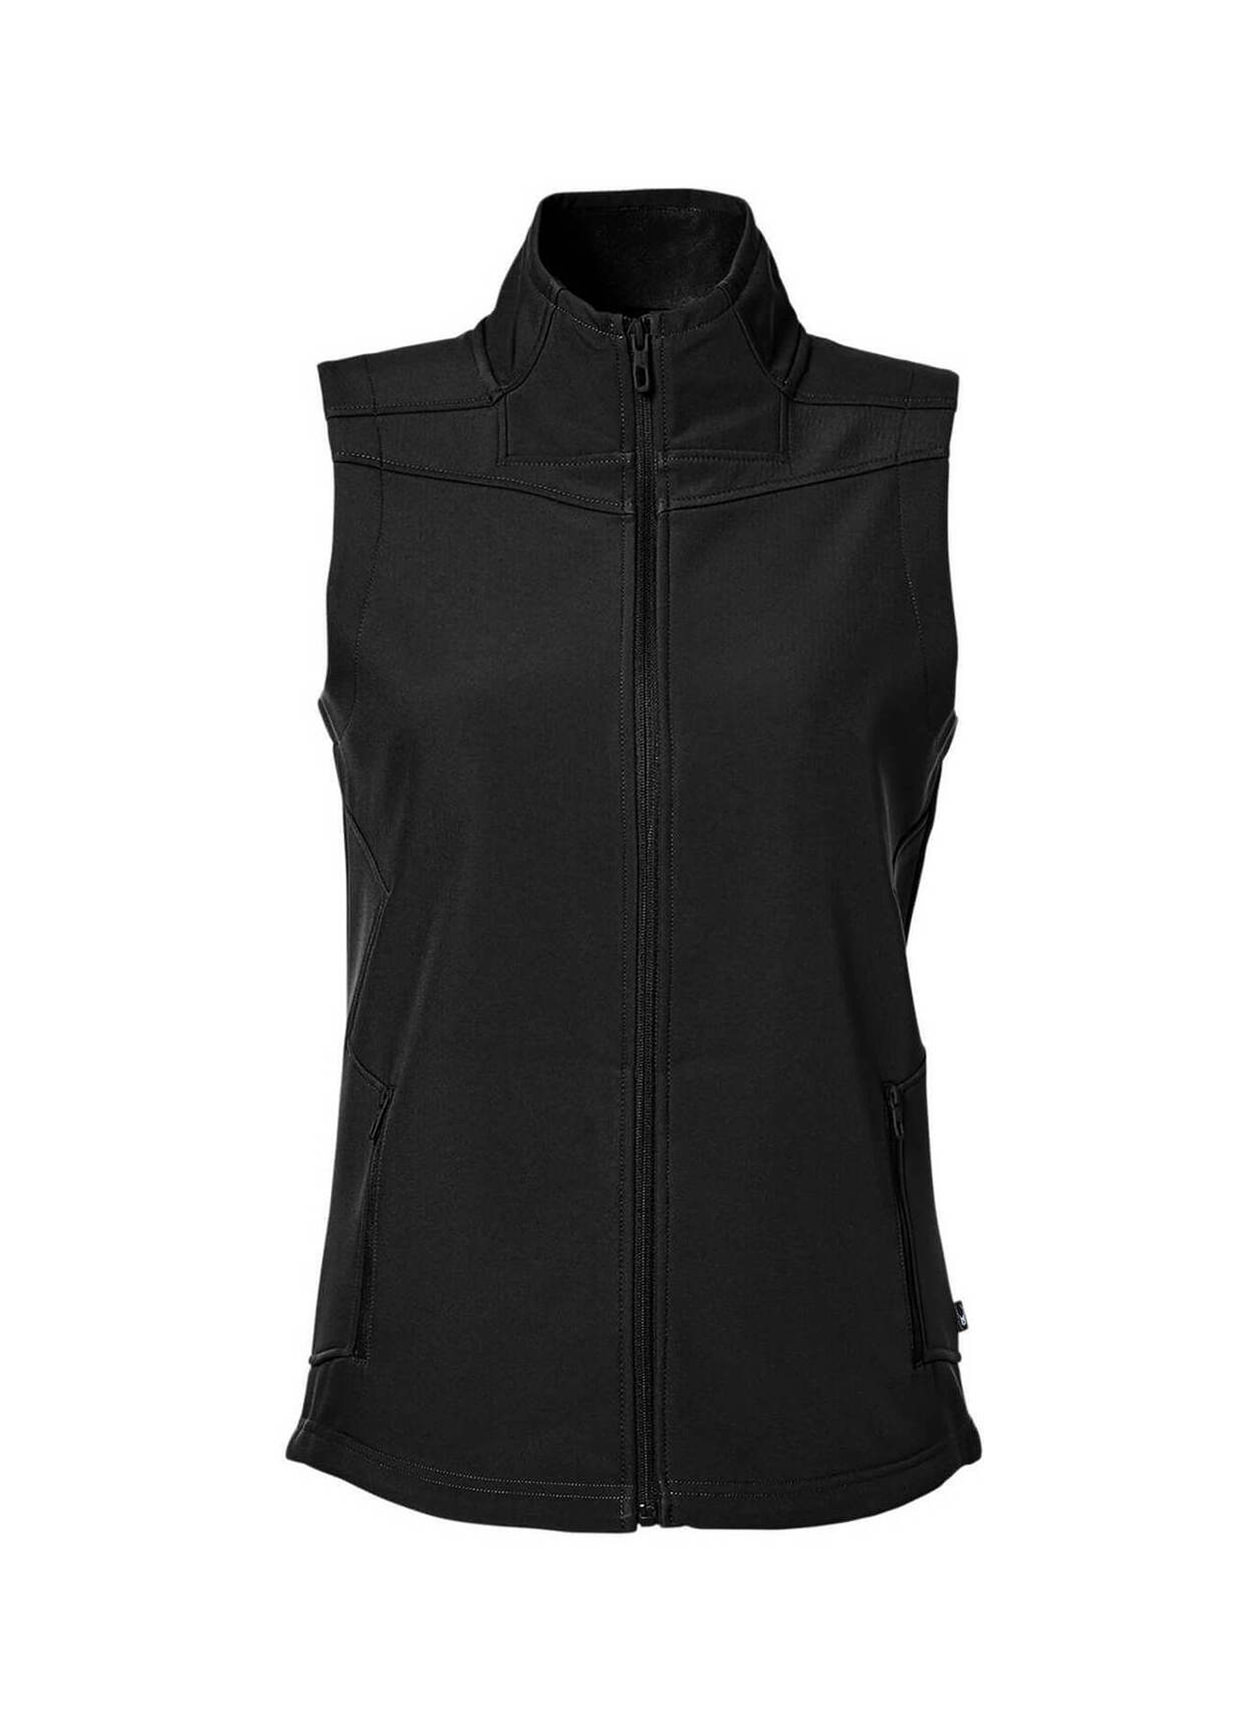 Spyder Women's Black Touring Vest